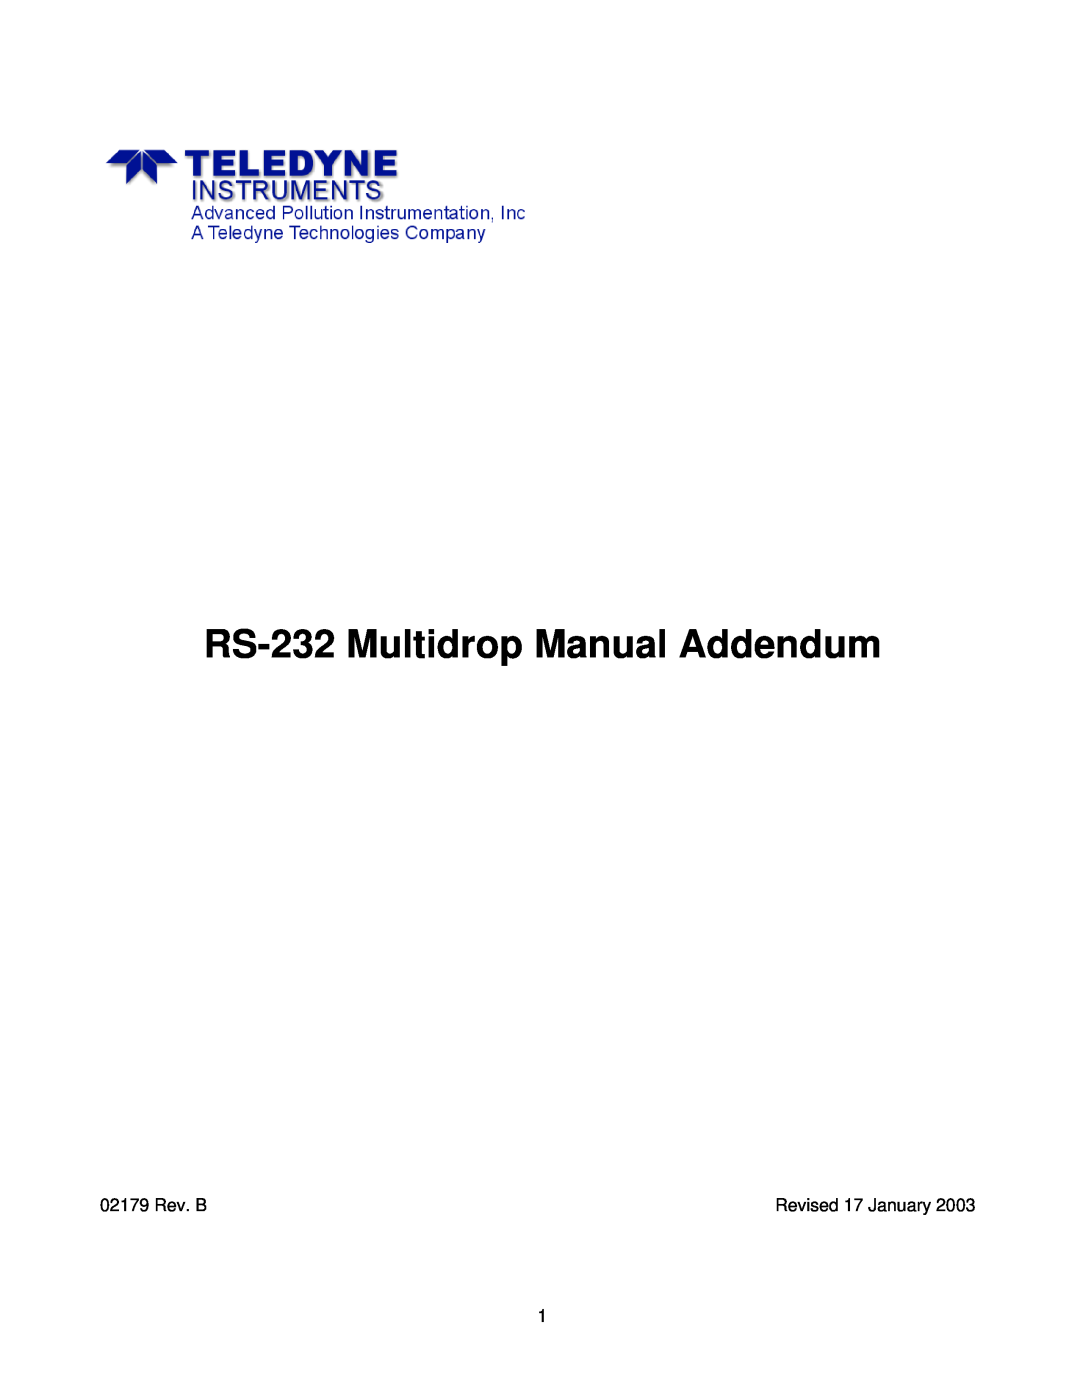 Teledyne manual RS-232 Multidrop Manual Addendum, 02179 Rev. B, Revised 17 January 